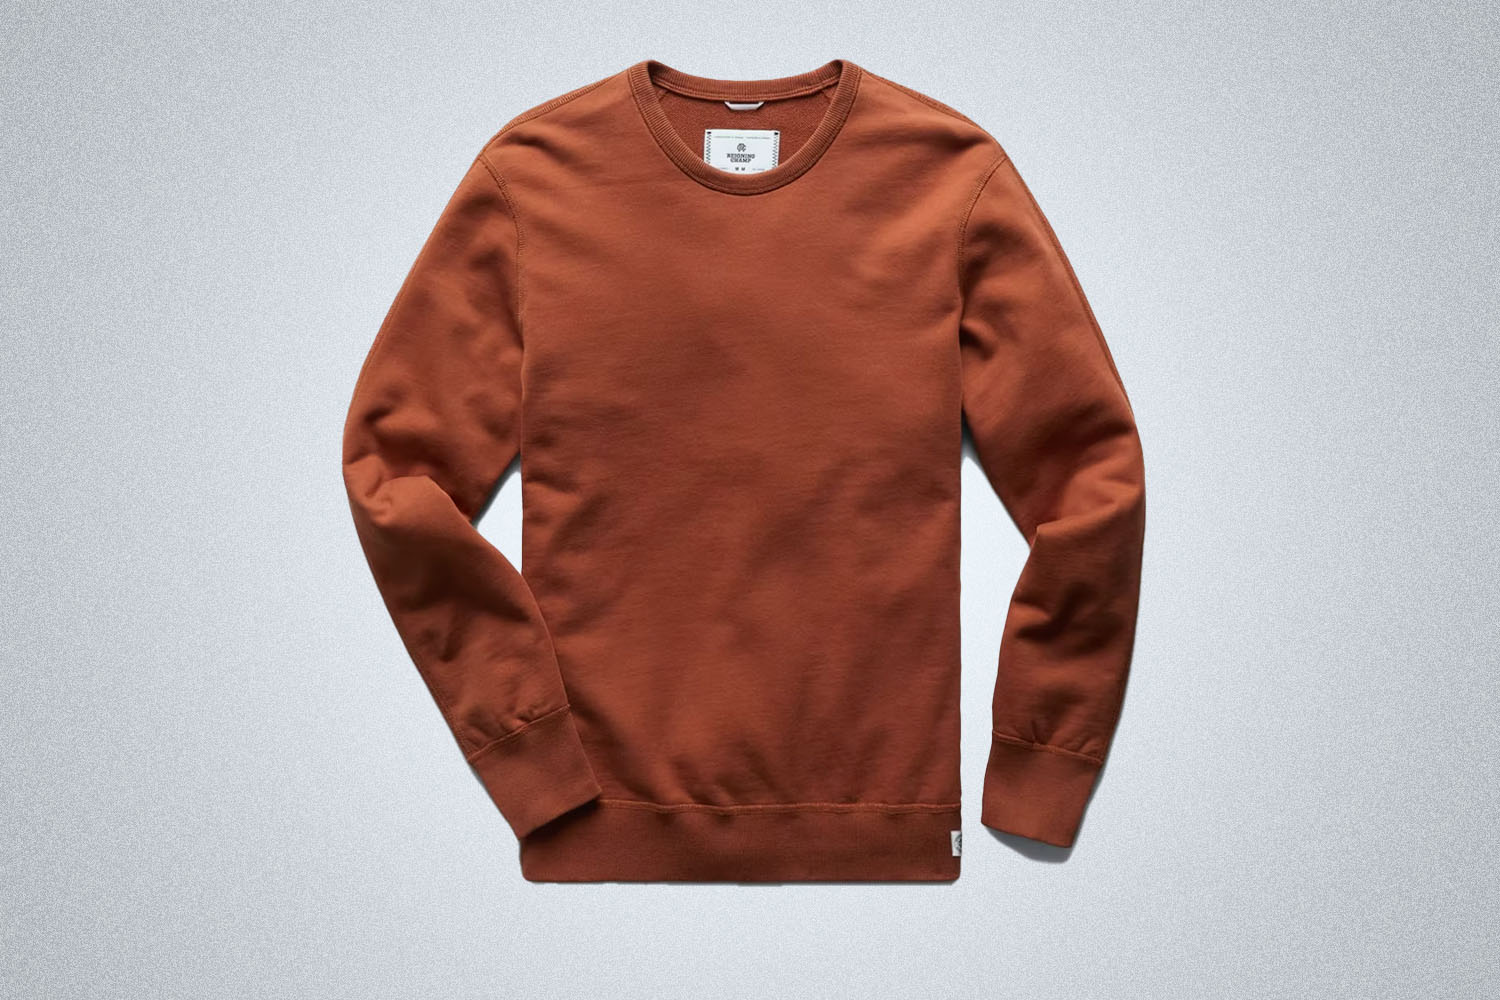 A orange sweater